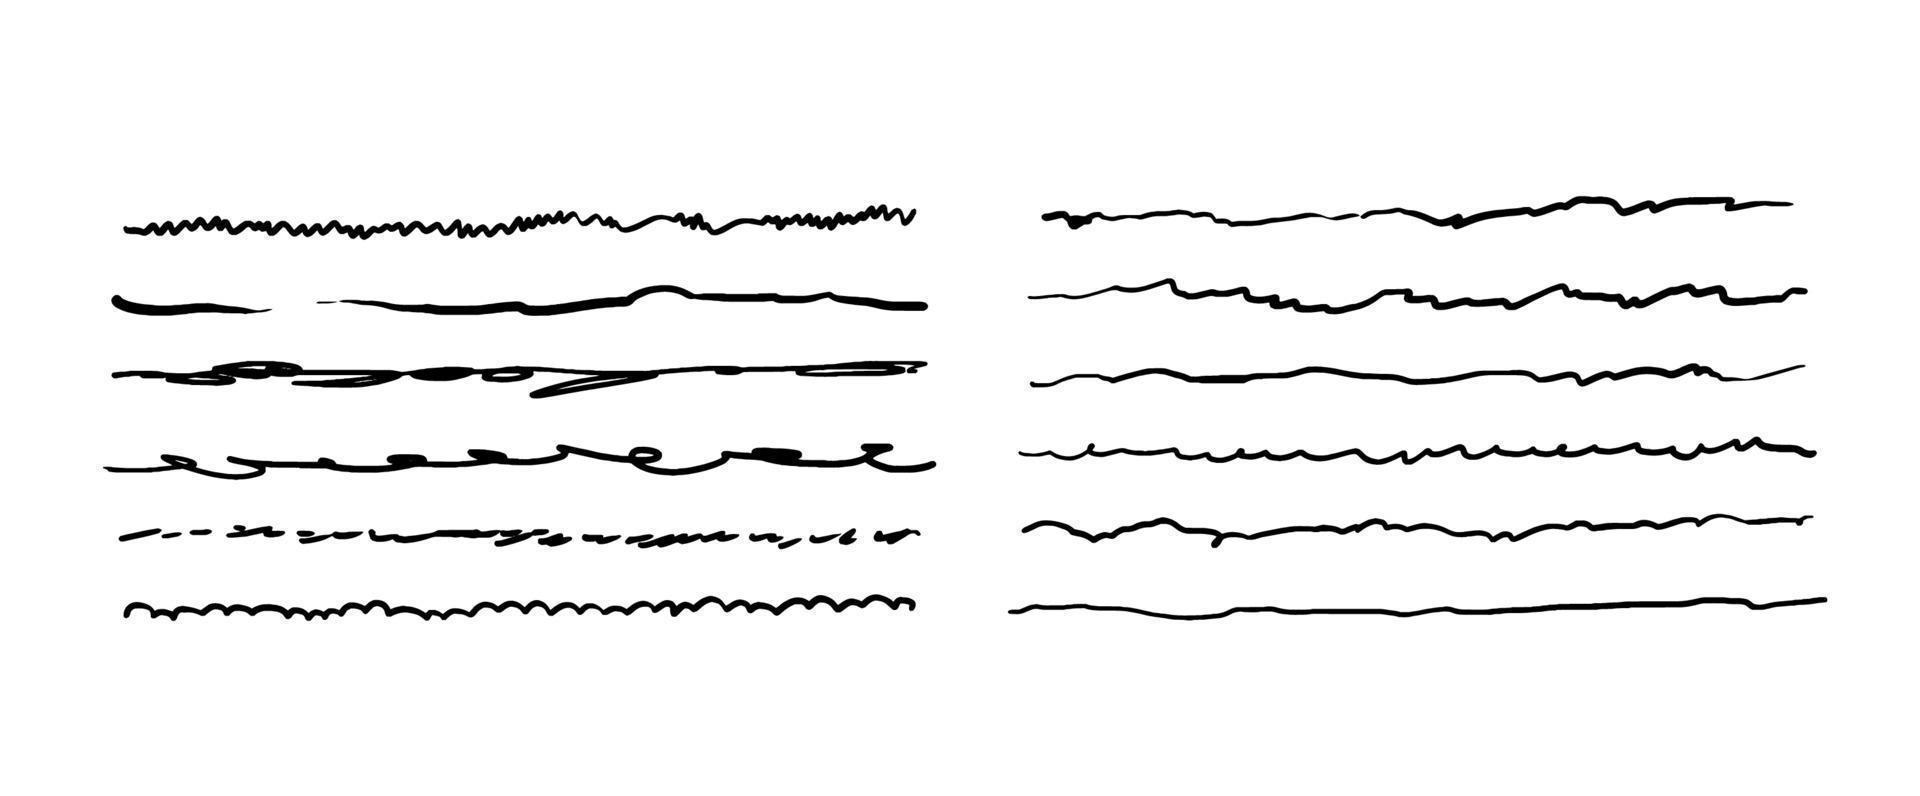 líneas de garabatos dibujadas a mano. un conjunto de subrayados temblorosos. ilustración vectorial de elementos gráficos para resaltar, subrayar, bordes. vector